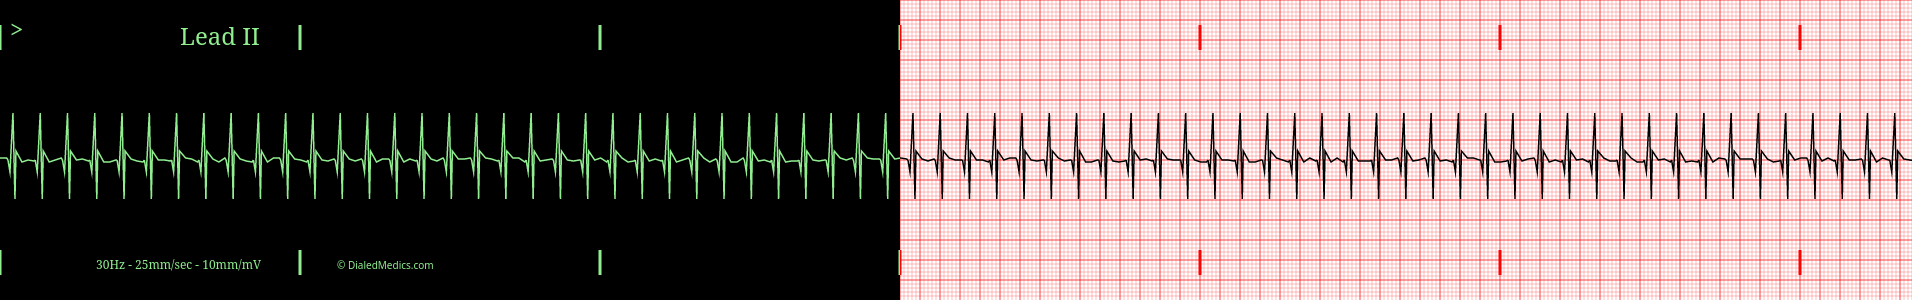 SVT practice EKG tracing.